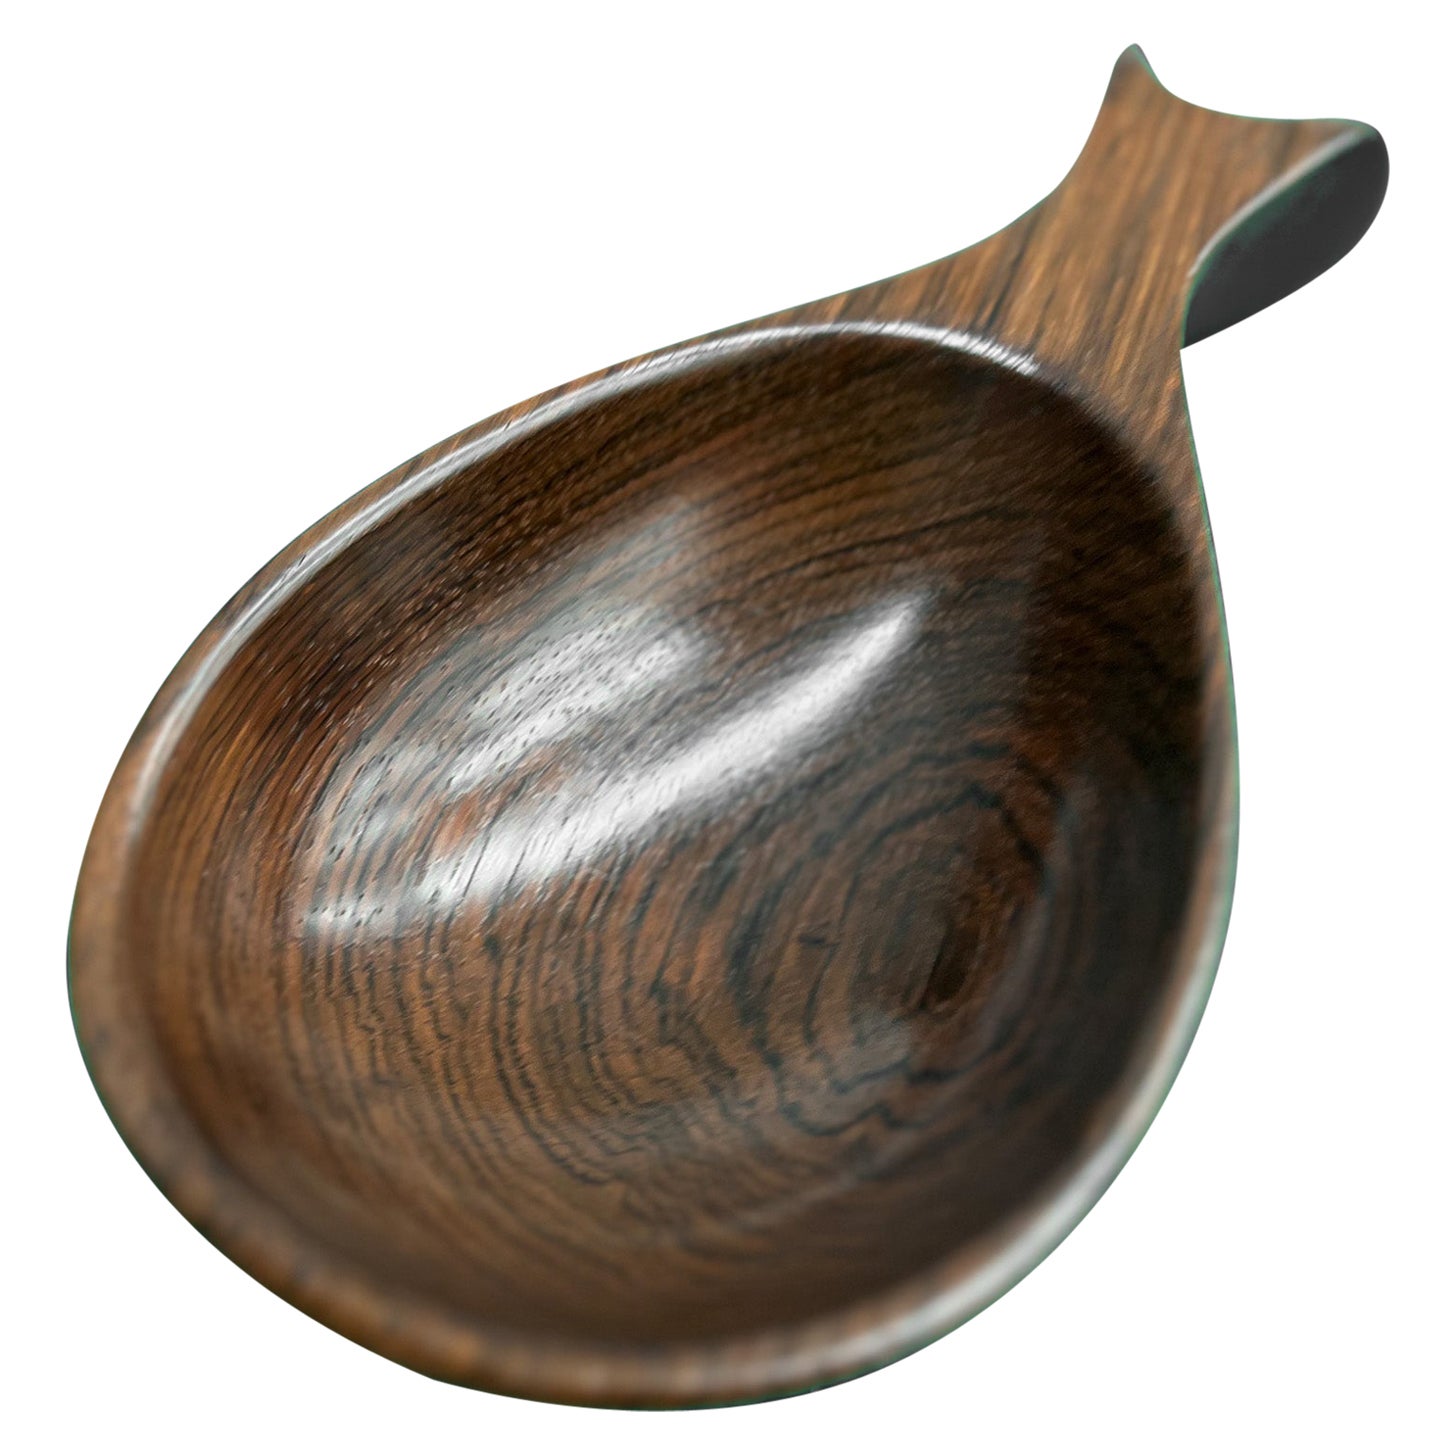 Brazilian Mid-Century Modern Decorative Bowl in Hardwood by Tropic Art